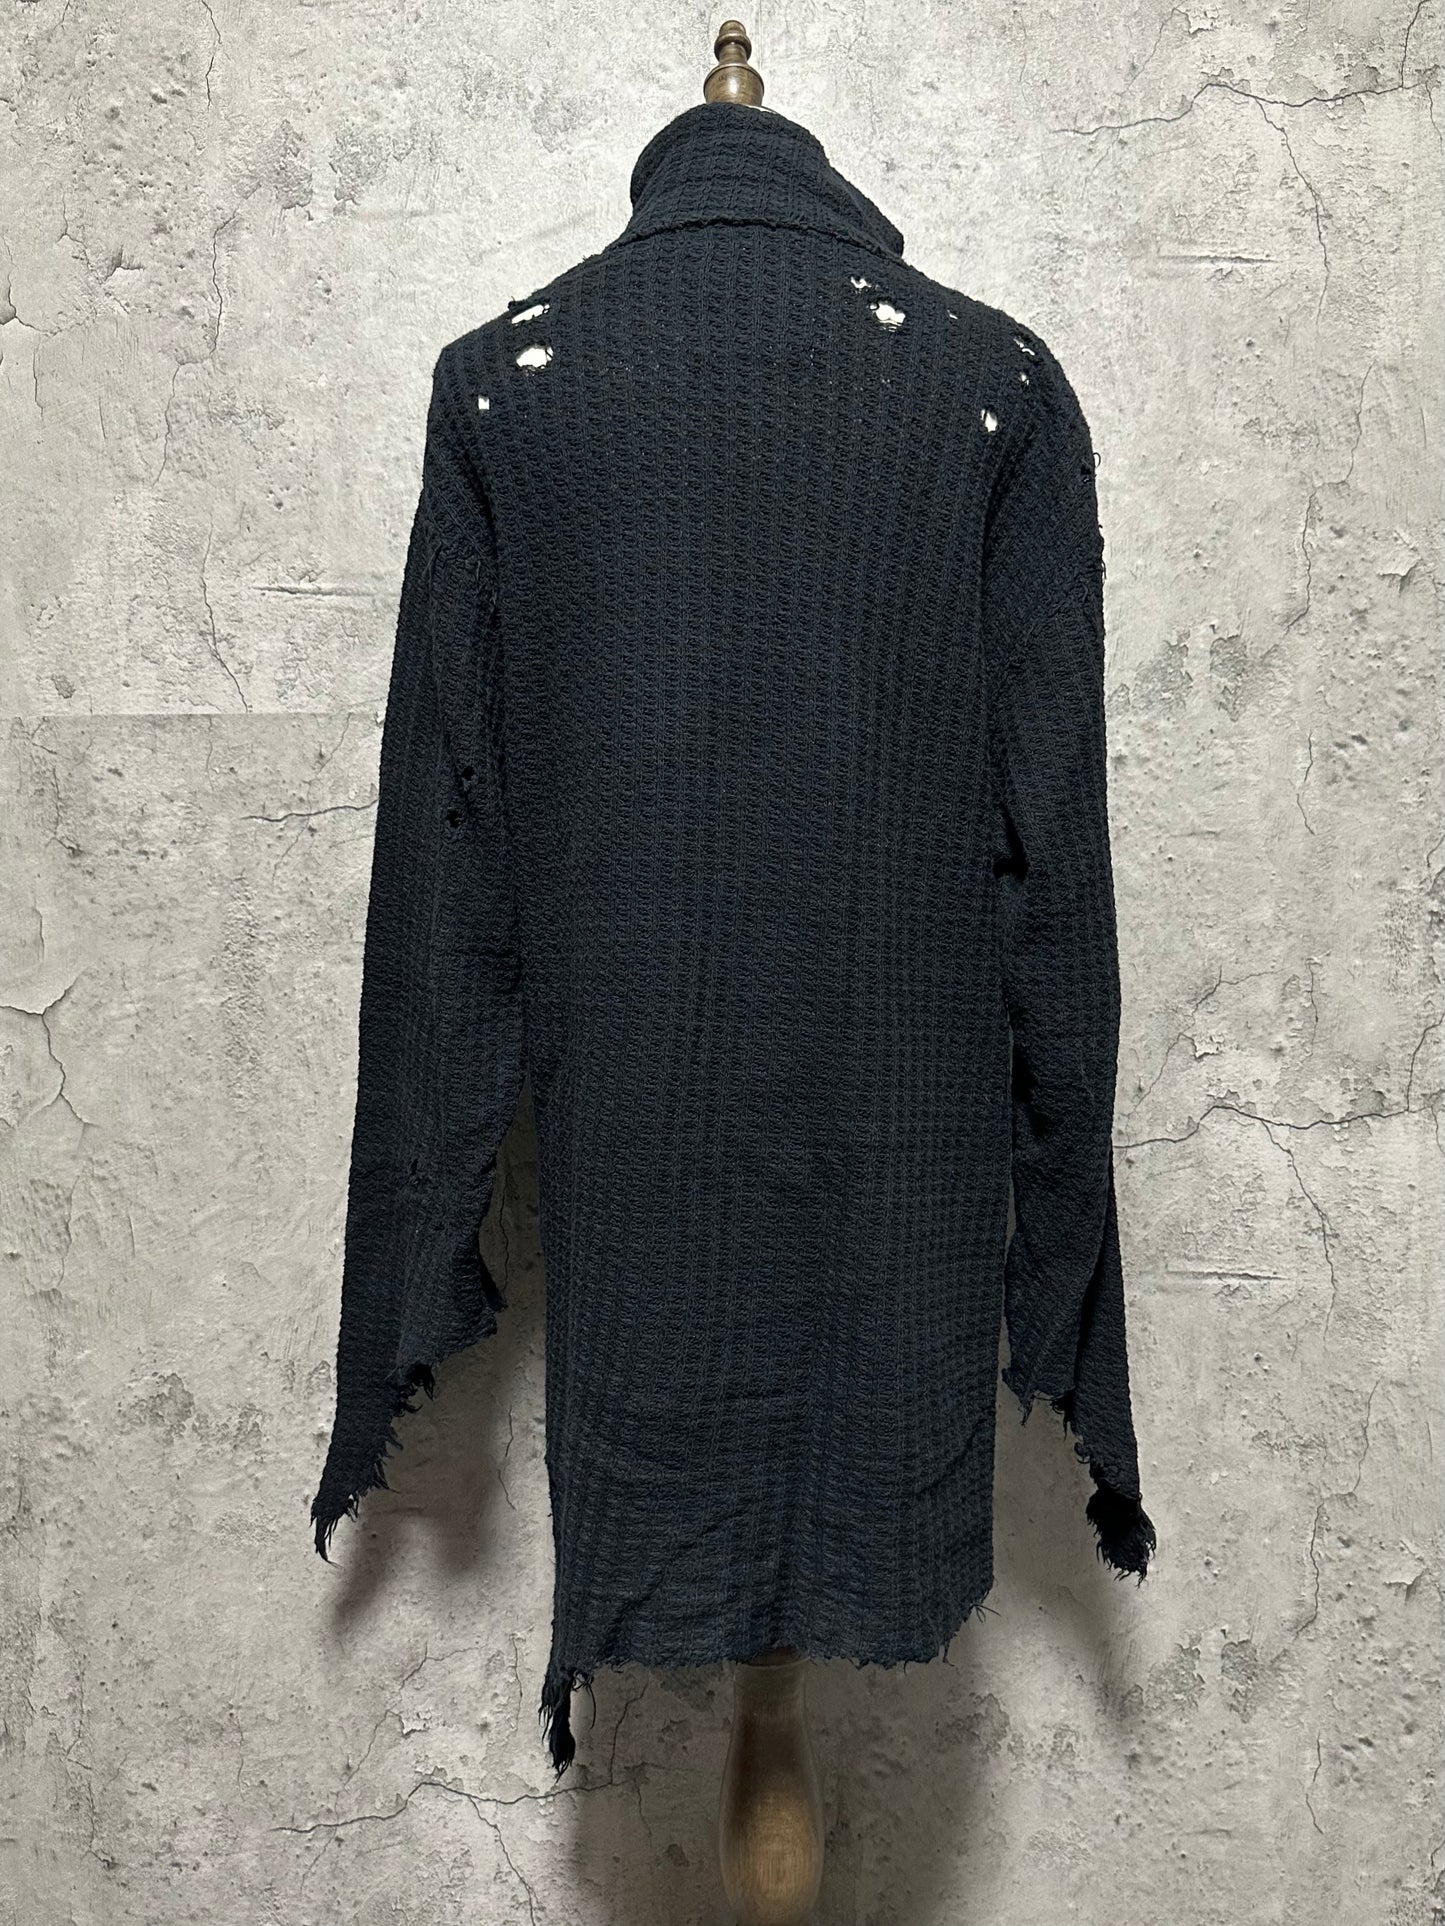 Maison MIHARA YASUHIRO damage turtle knit sweater 16AW